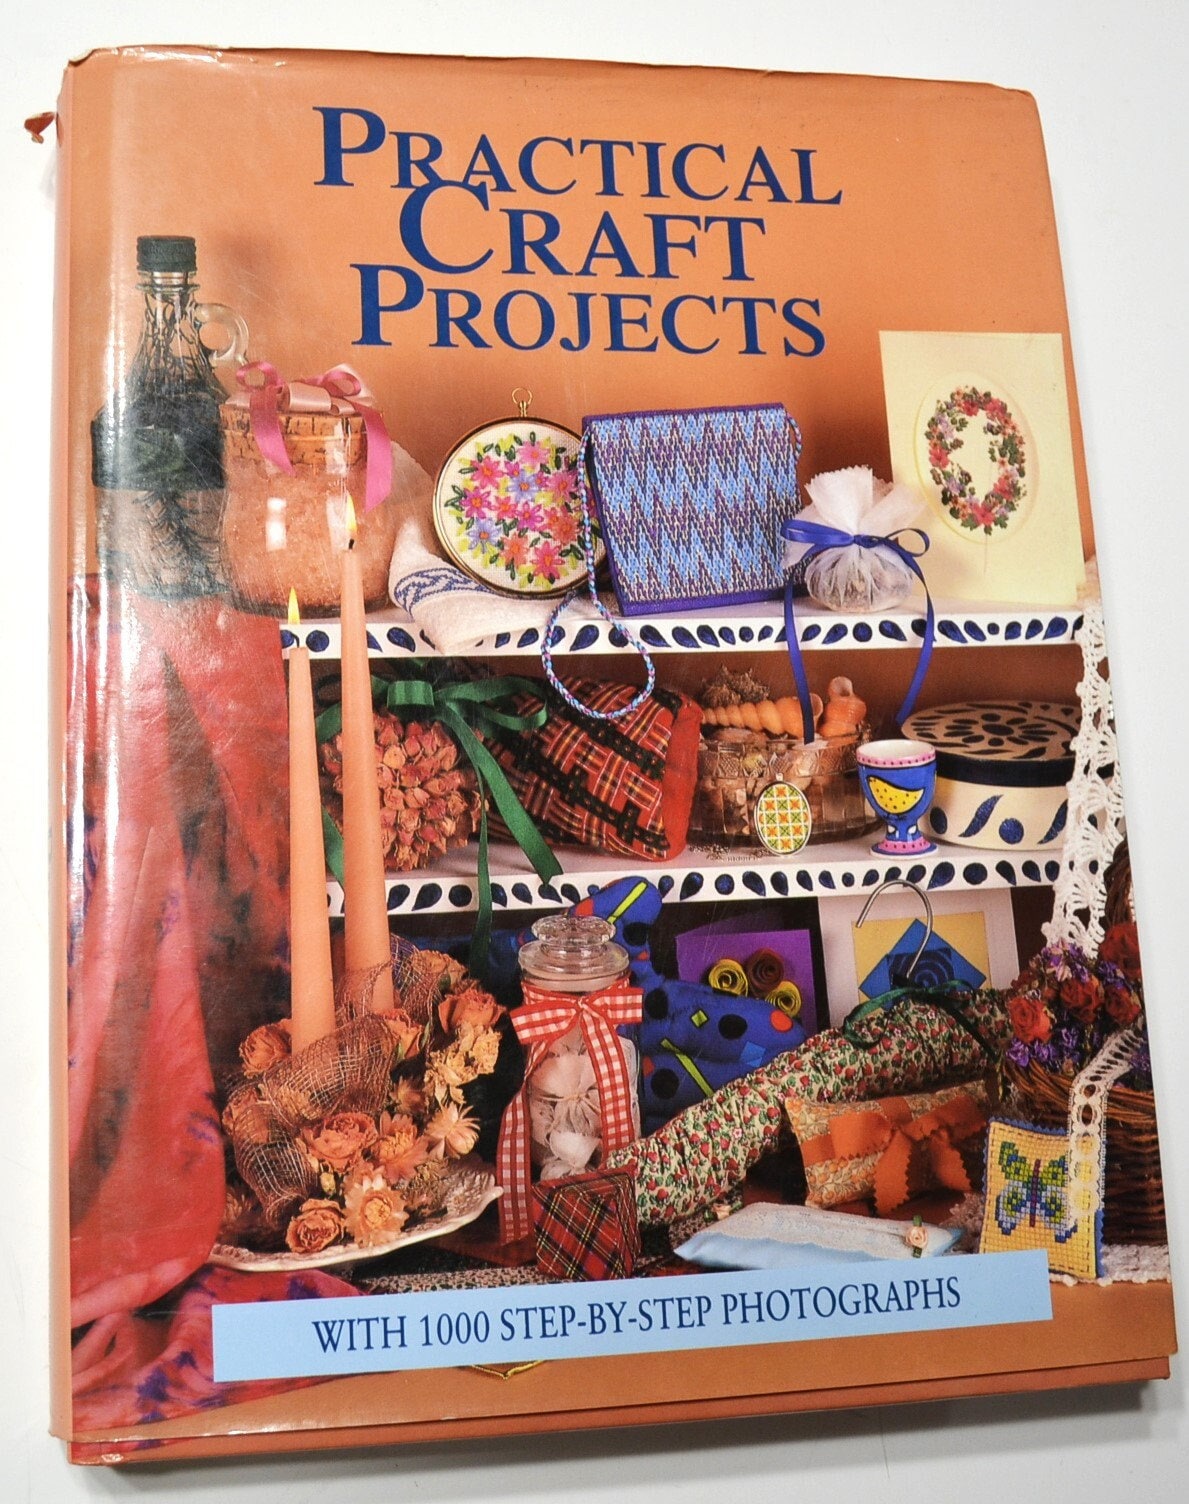 Book, Craft Book, Knitting Book, Loom Knitting Primer 